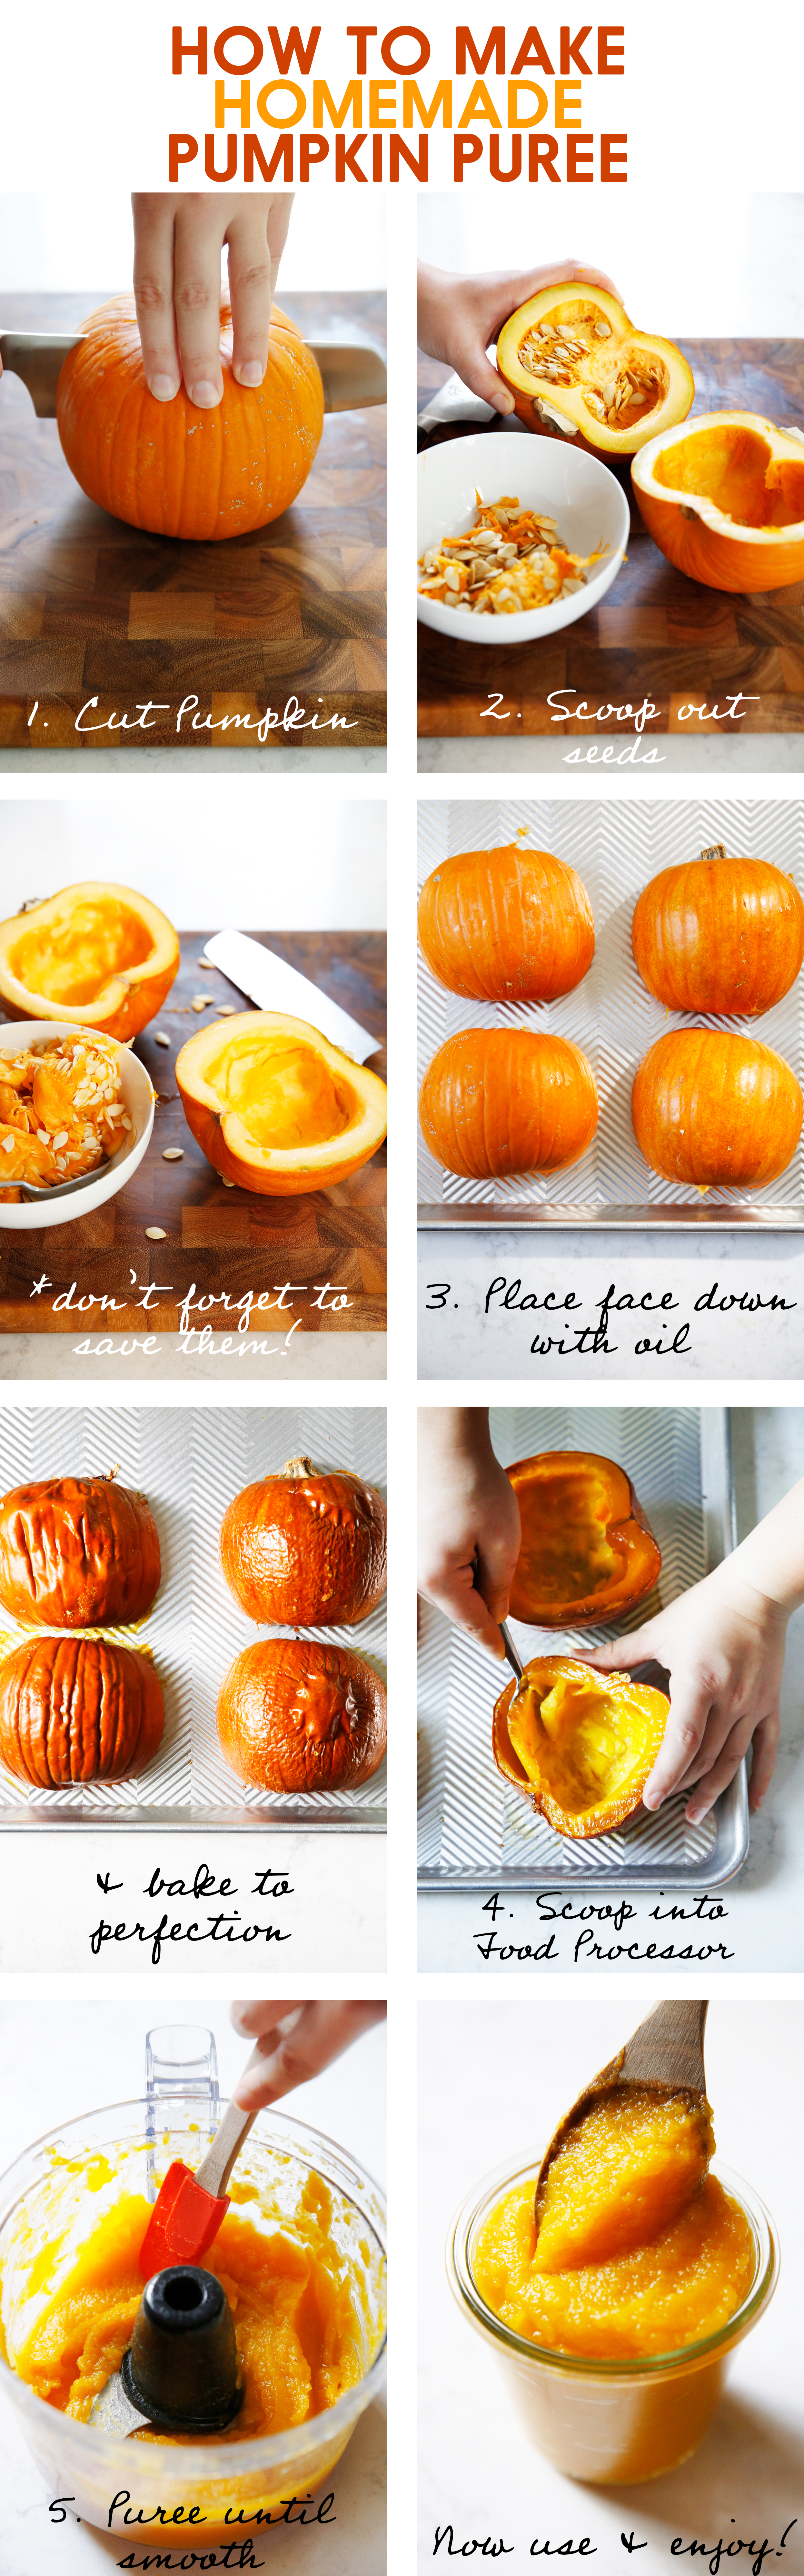 making pumpkin puree step by step